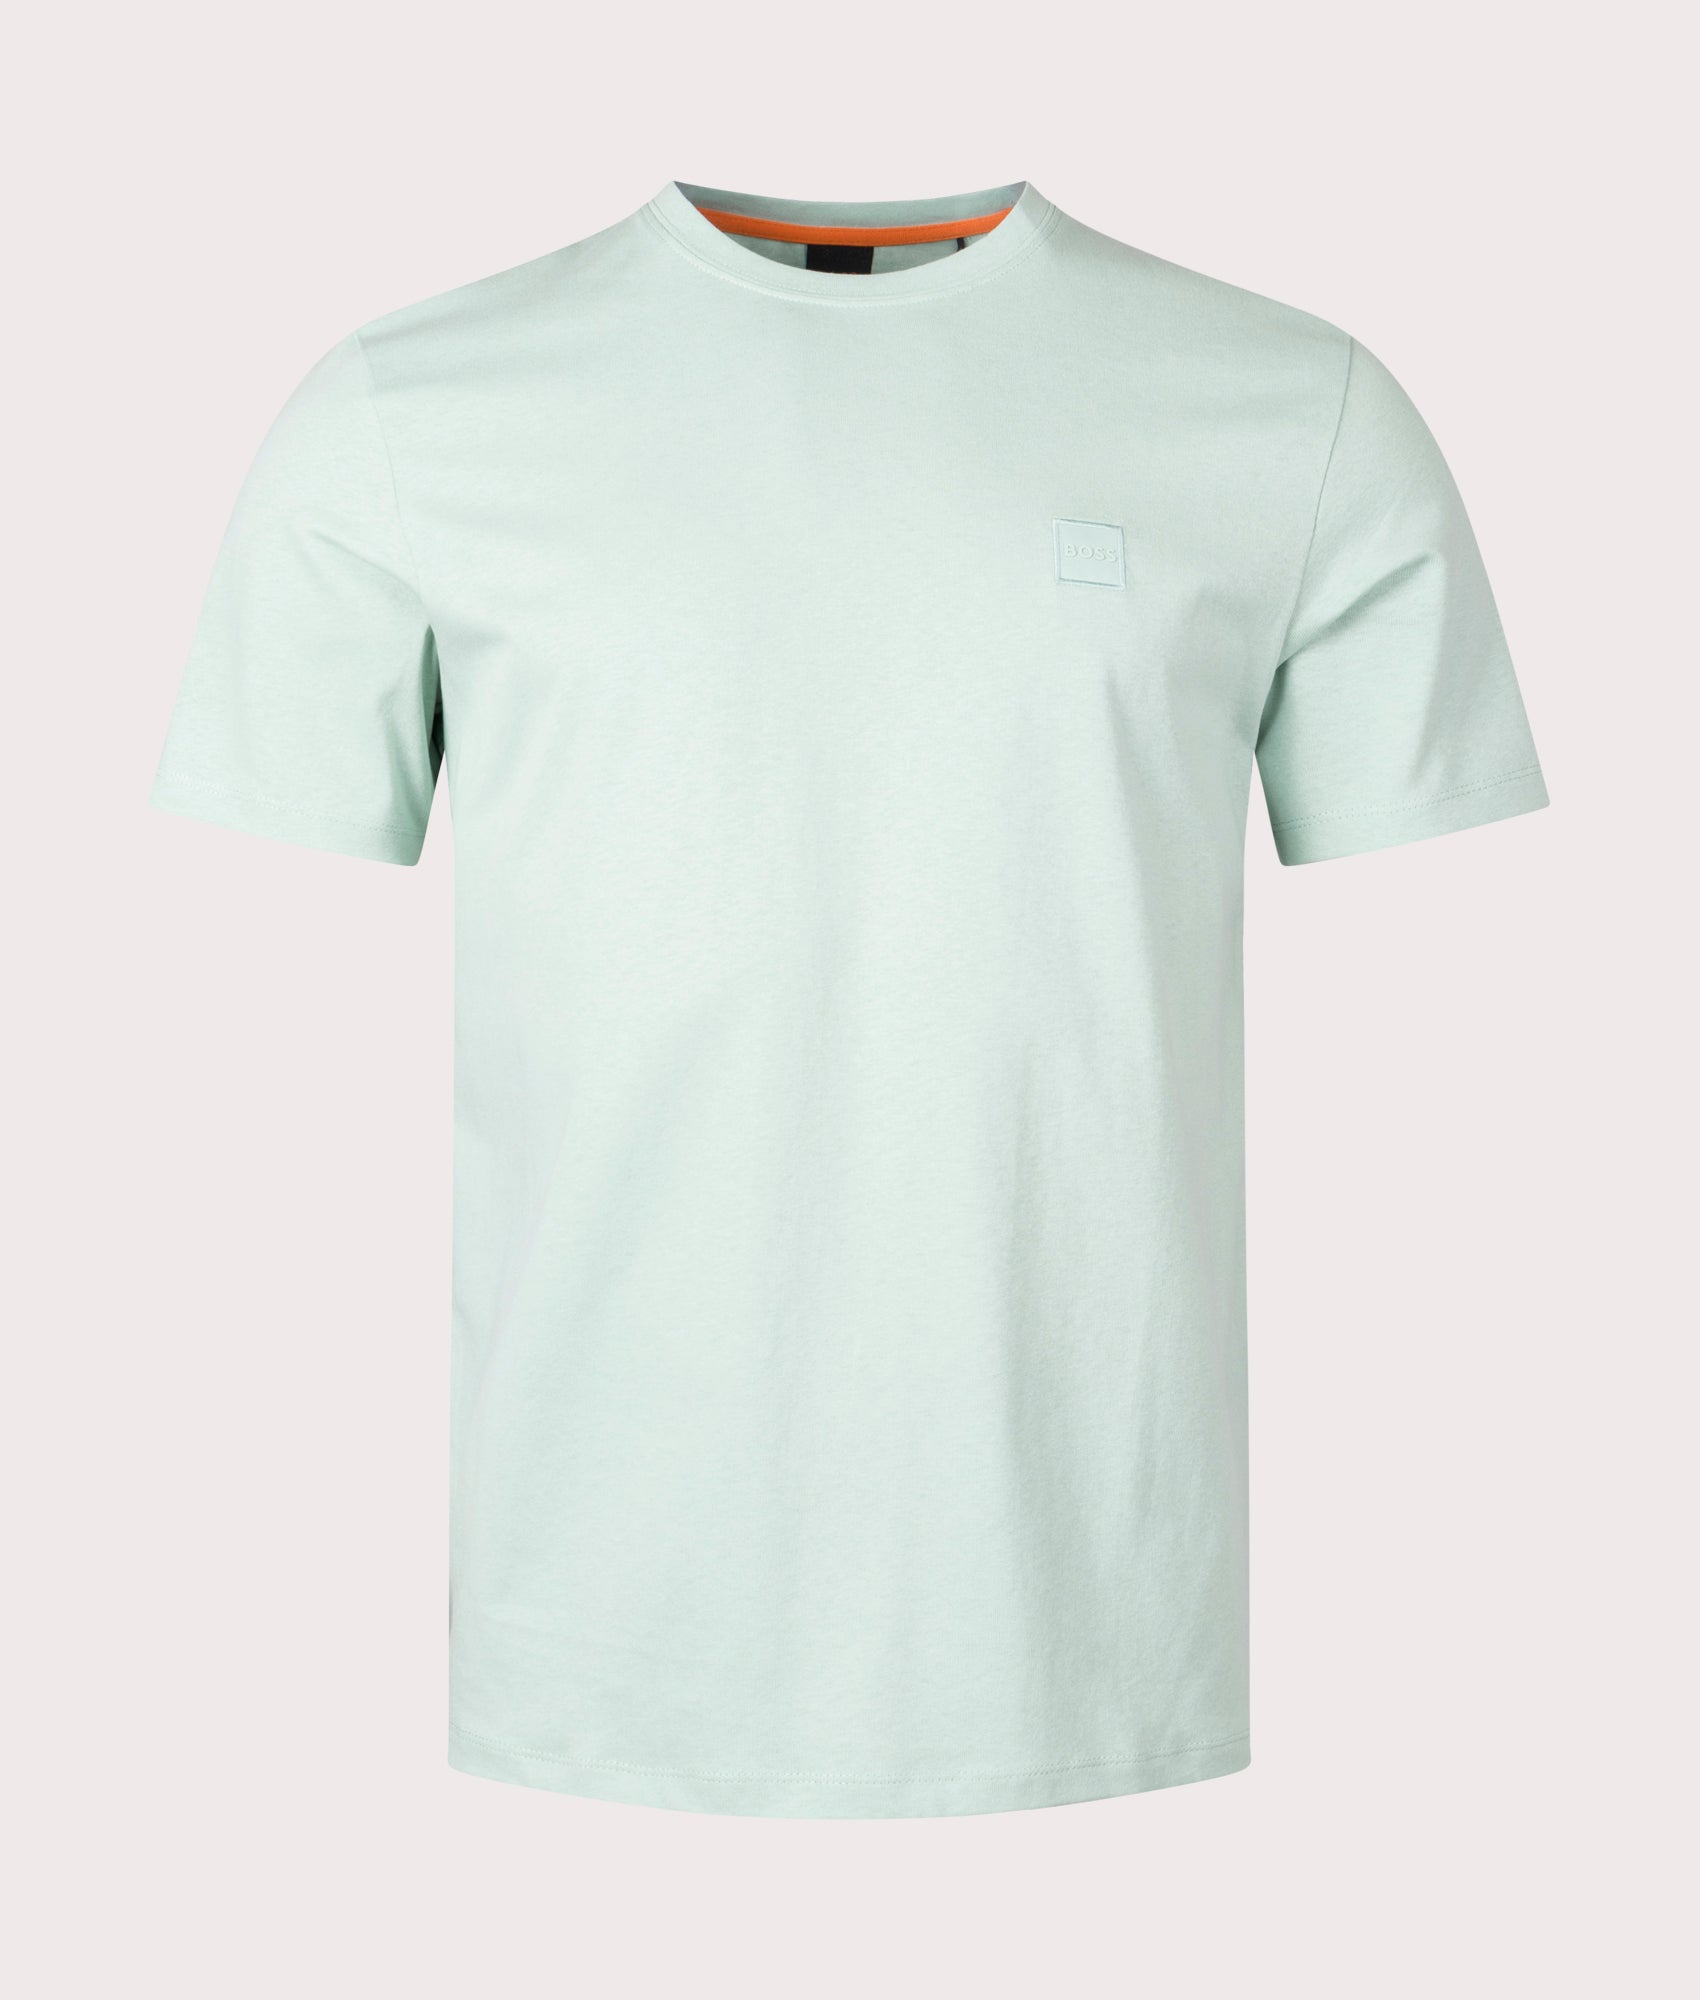 BOSS Mens Tales T-Shirt - Colour: 446 Turquoise/Aqua - Size: Medium